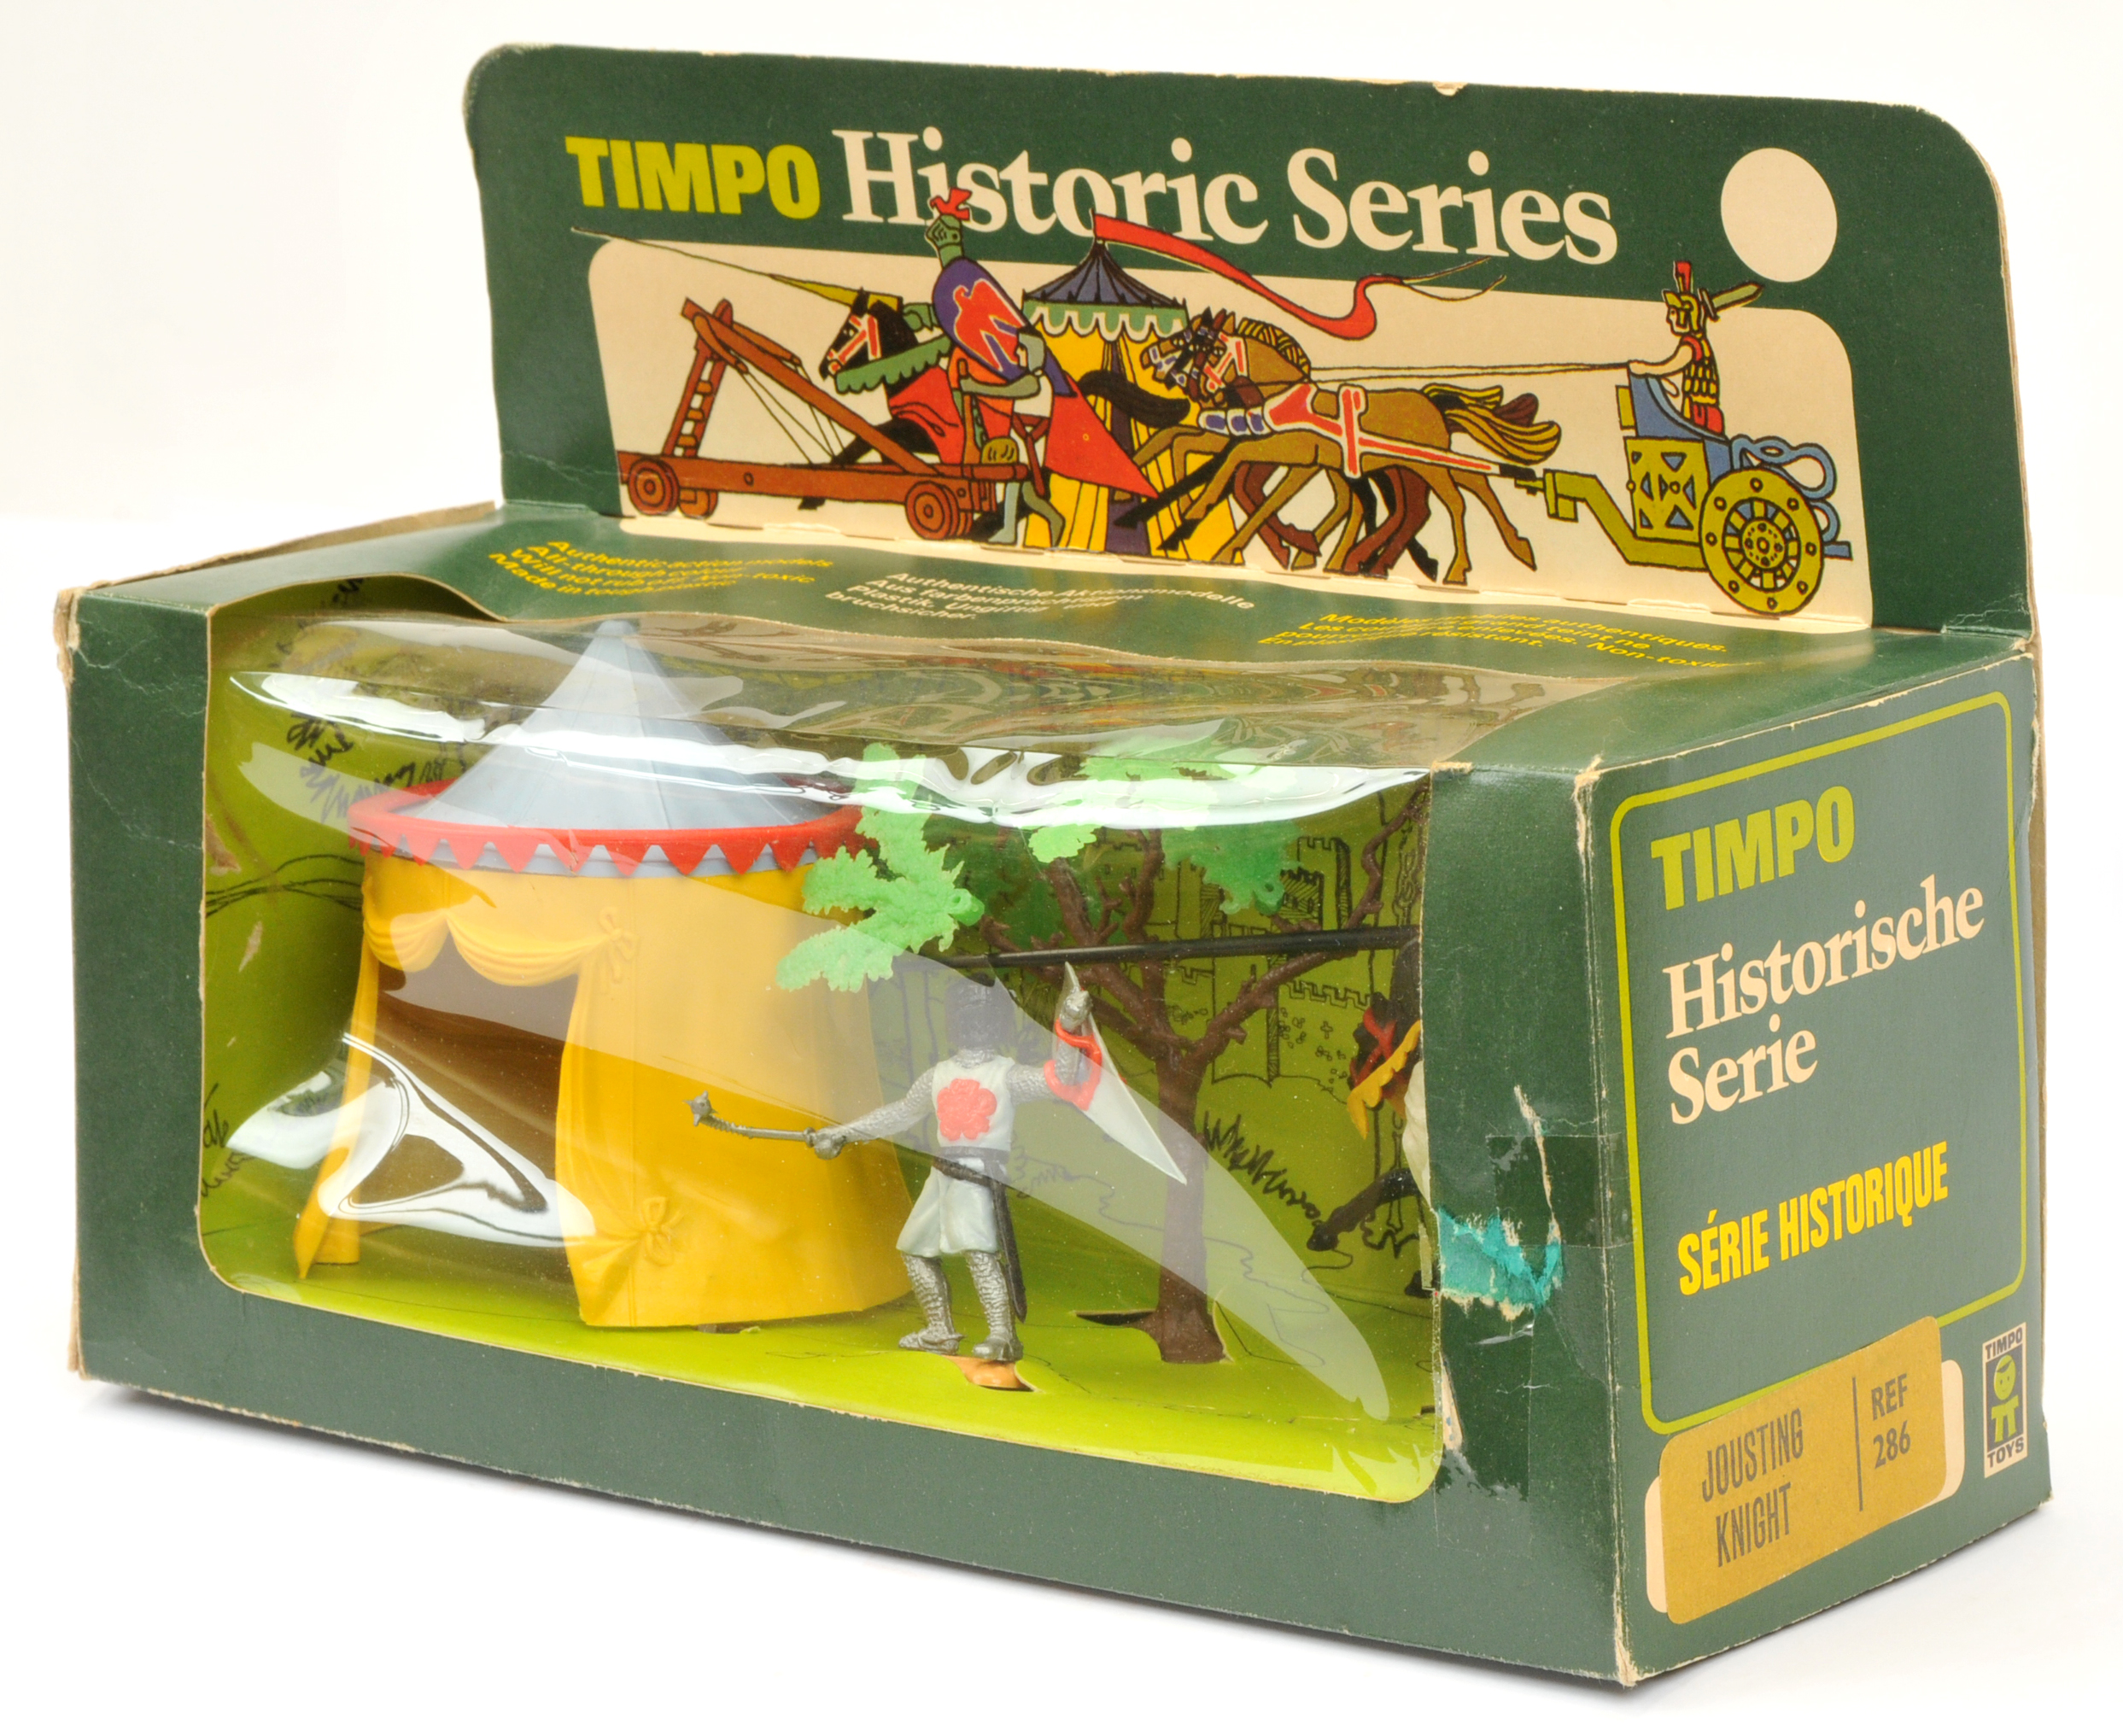 Timpo Historic Series - Set Ref. No. 286 'Jousting Knight', Boxed - Bild 2 aus 2